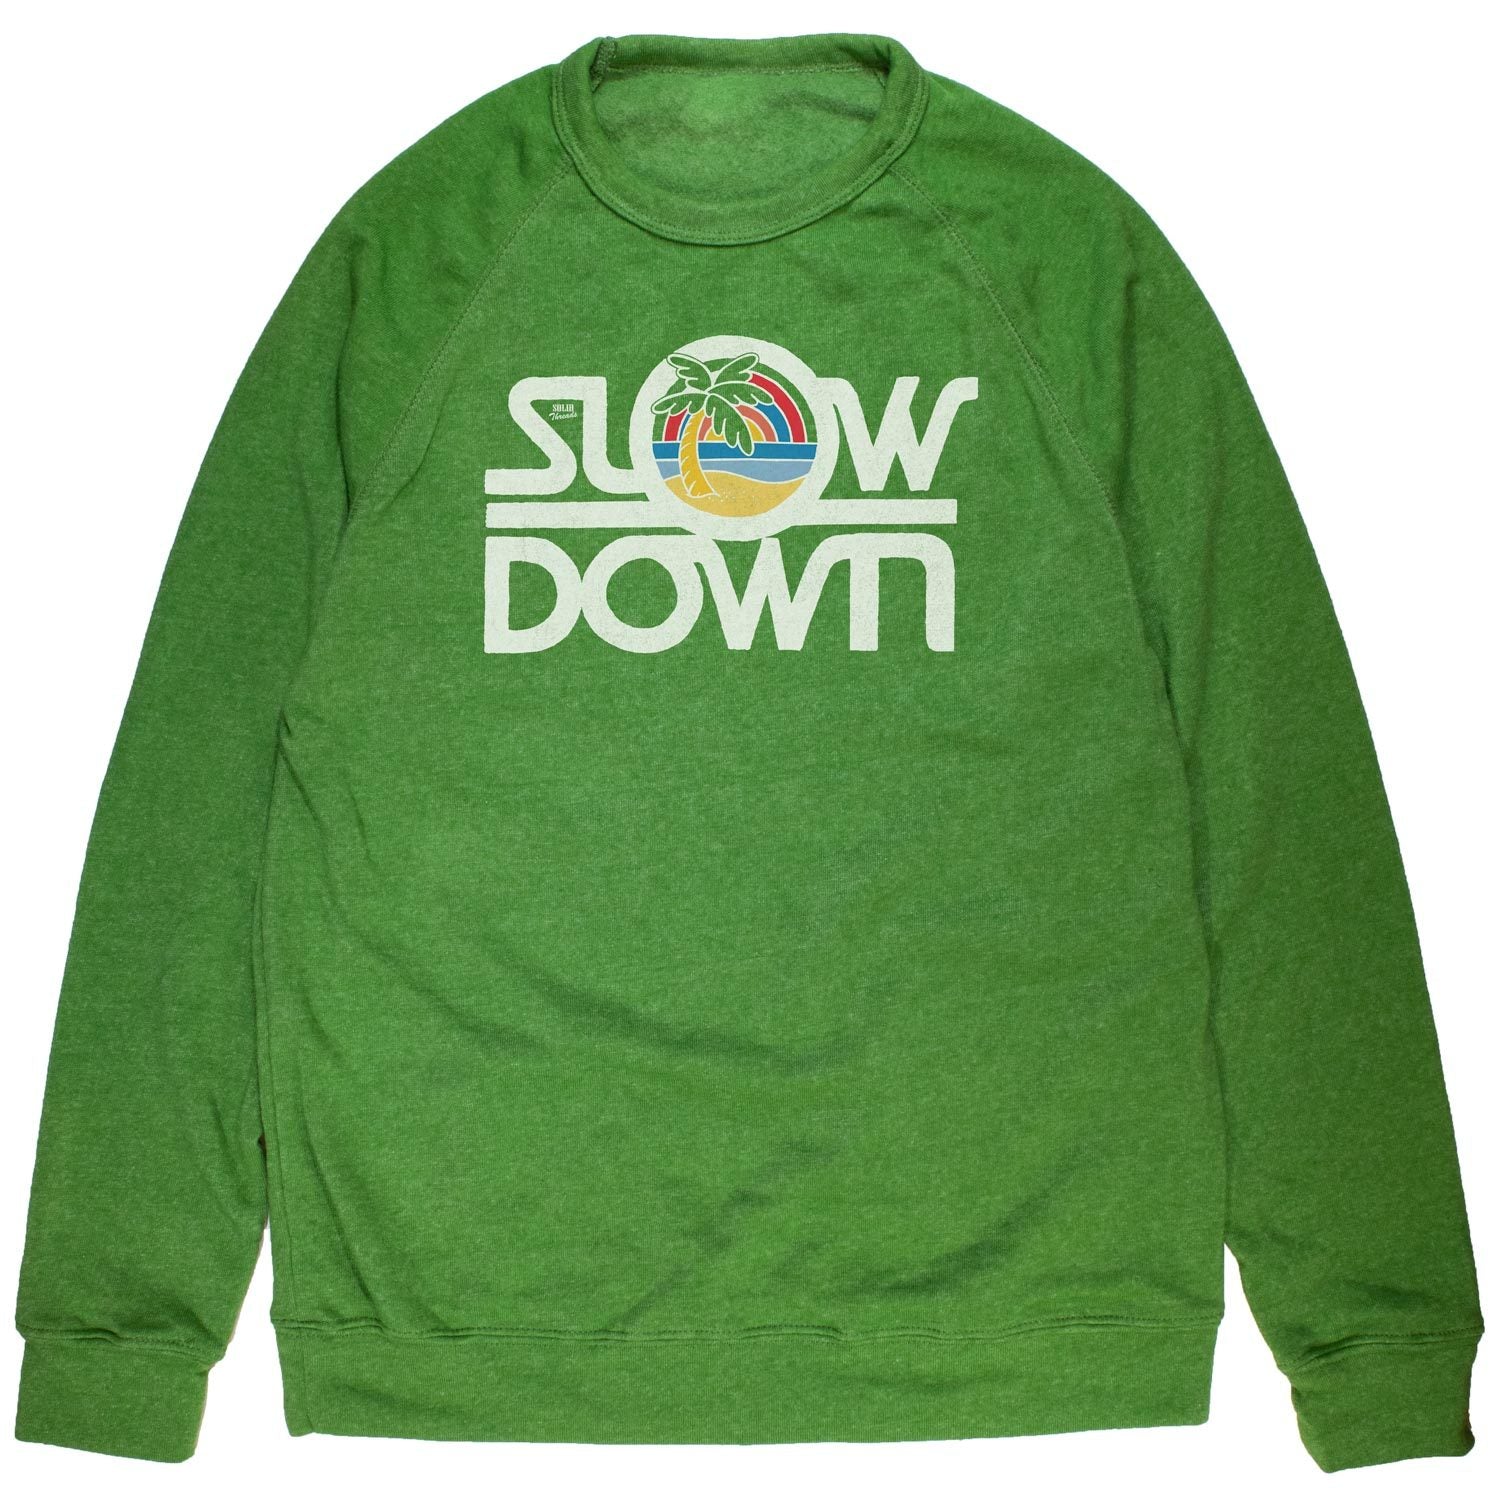 Slow Down Vintage Inspired Fleece Crewneck Sweatshirt with Retro Beach Graphic Kelly / Small